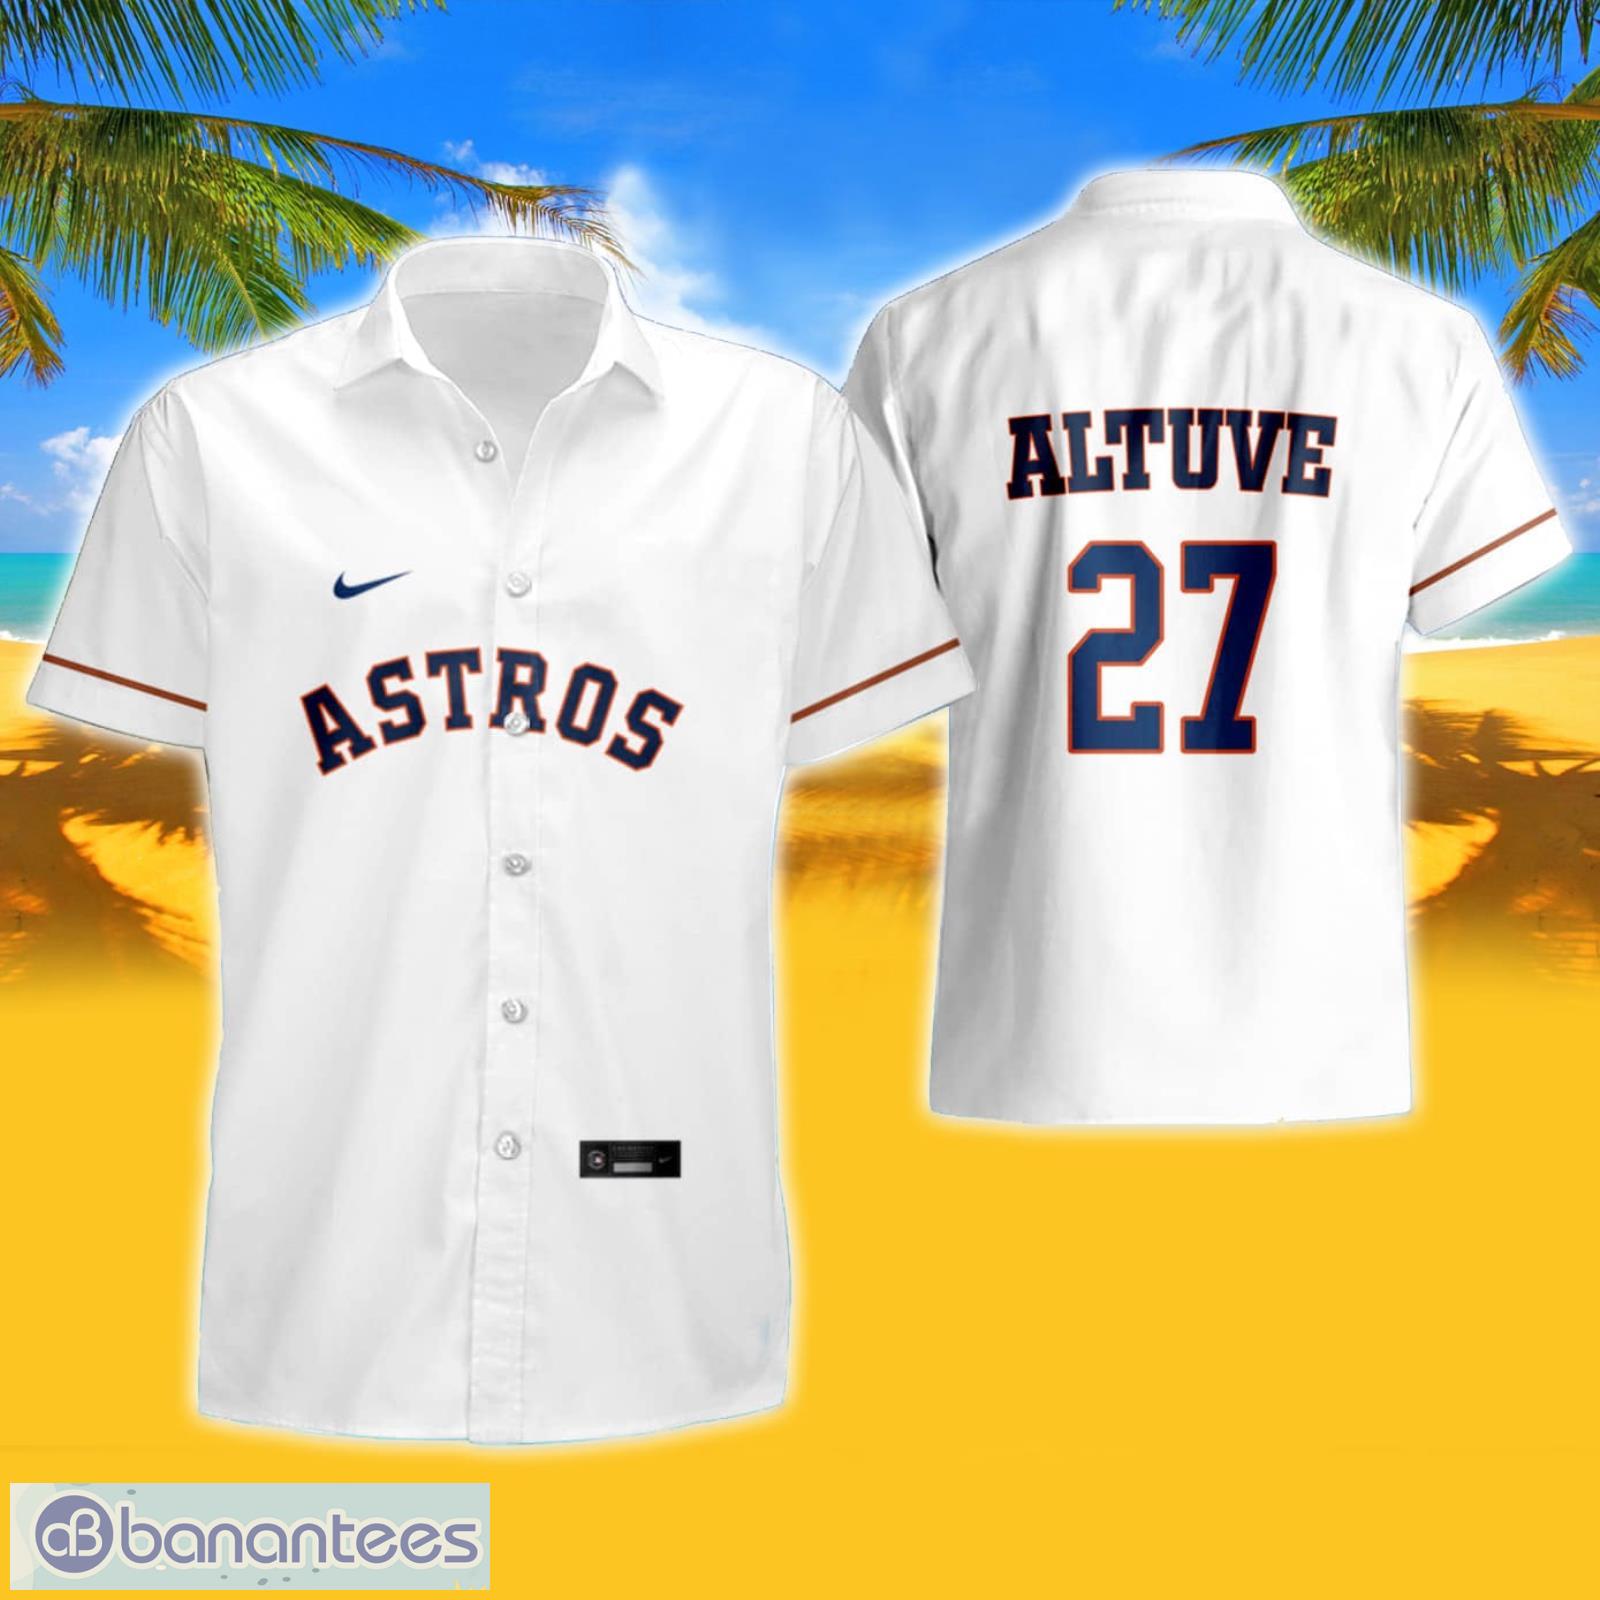 Houston Astros – Jose Altuve Hawaiian Shirt And Short Set - Freedomdesign